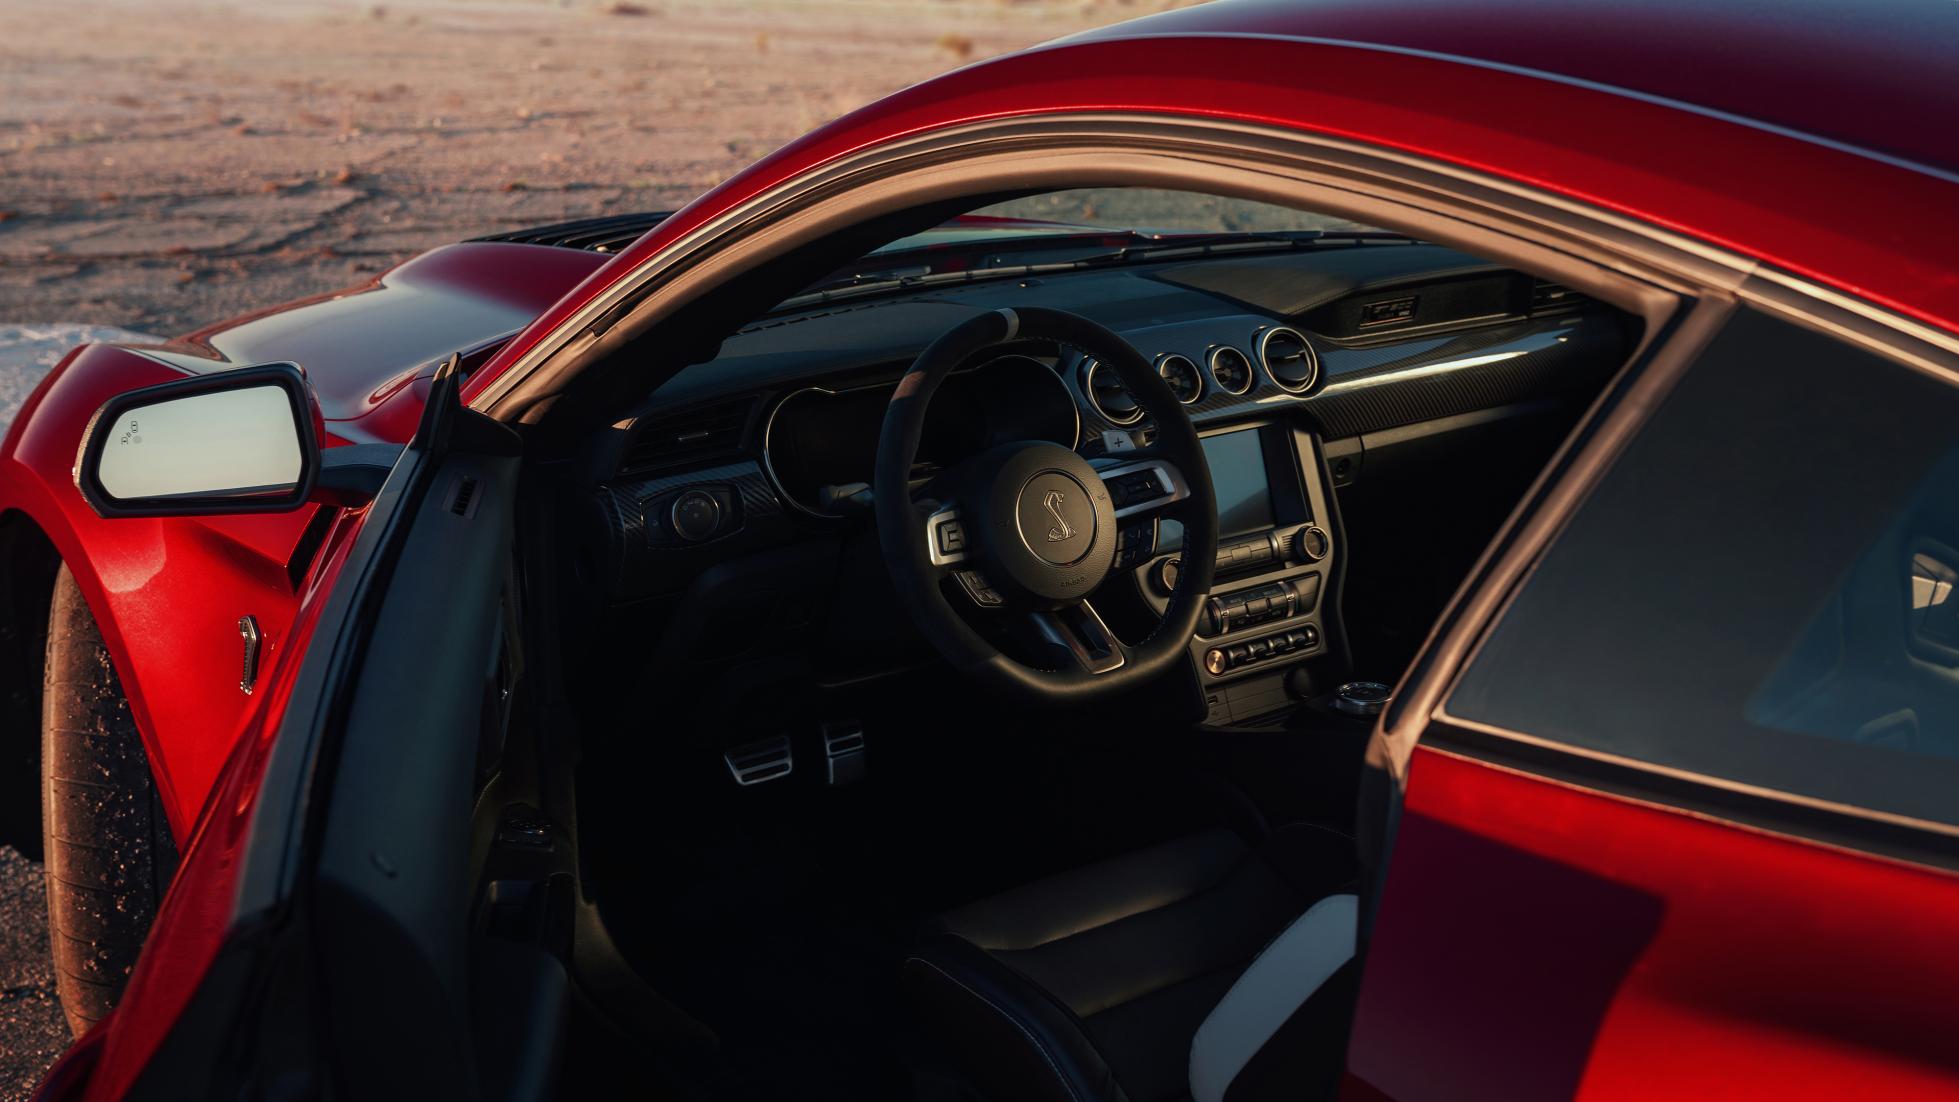 Ford Mustang : 760 ch pour la nouvelle Shelby GT500